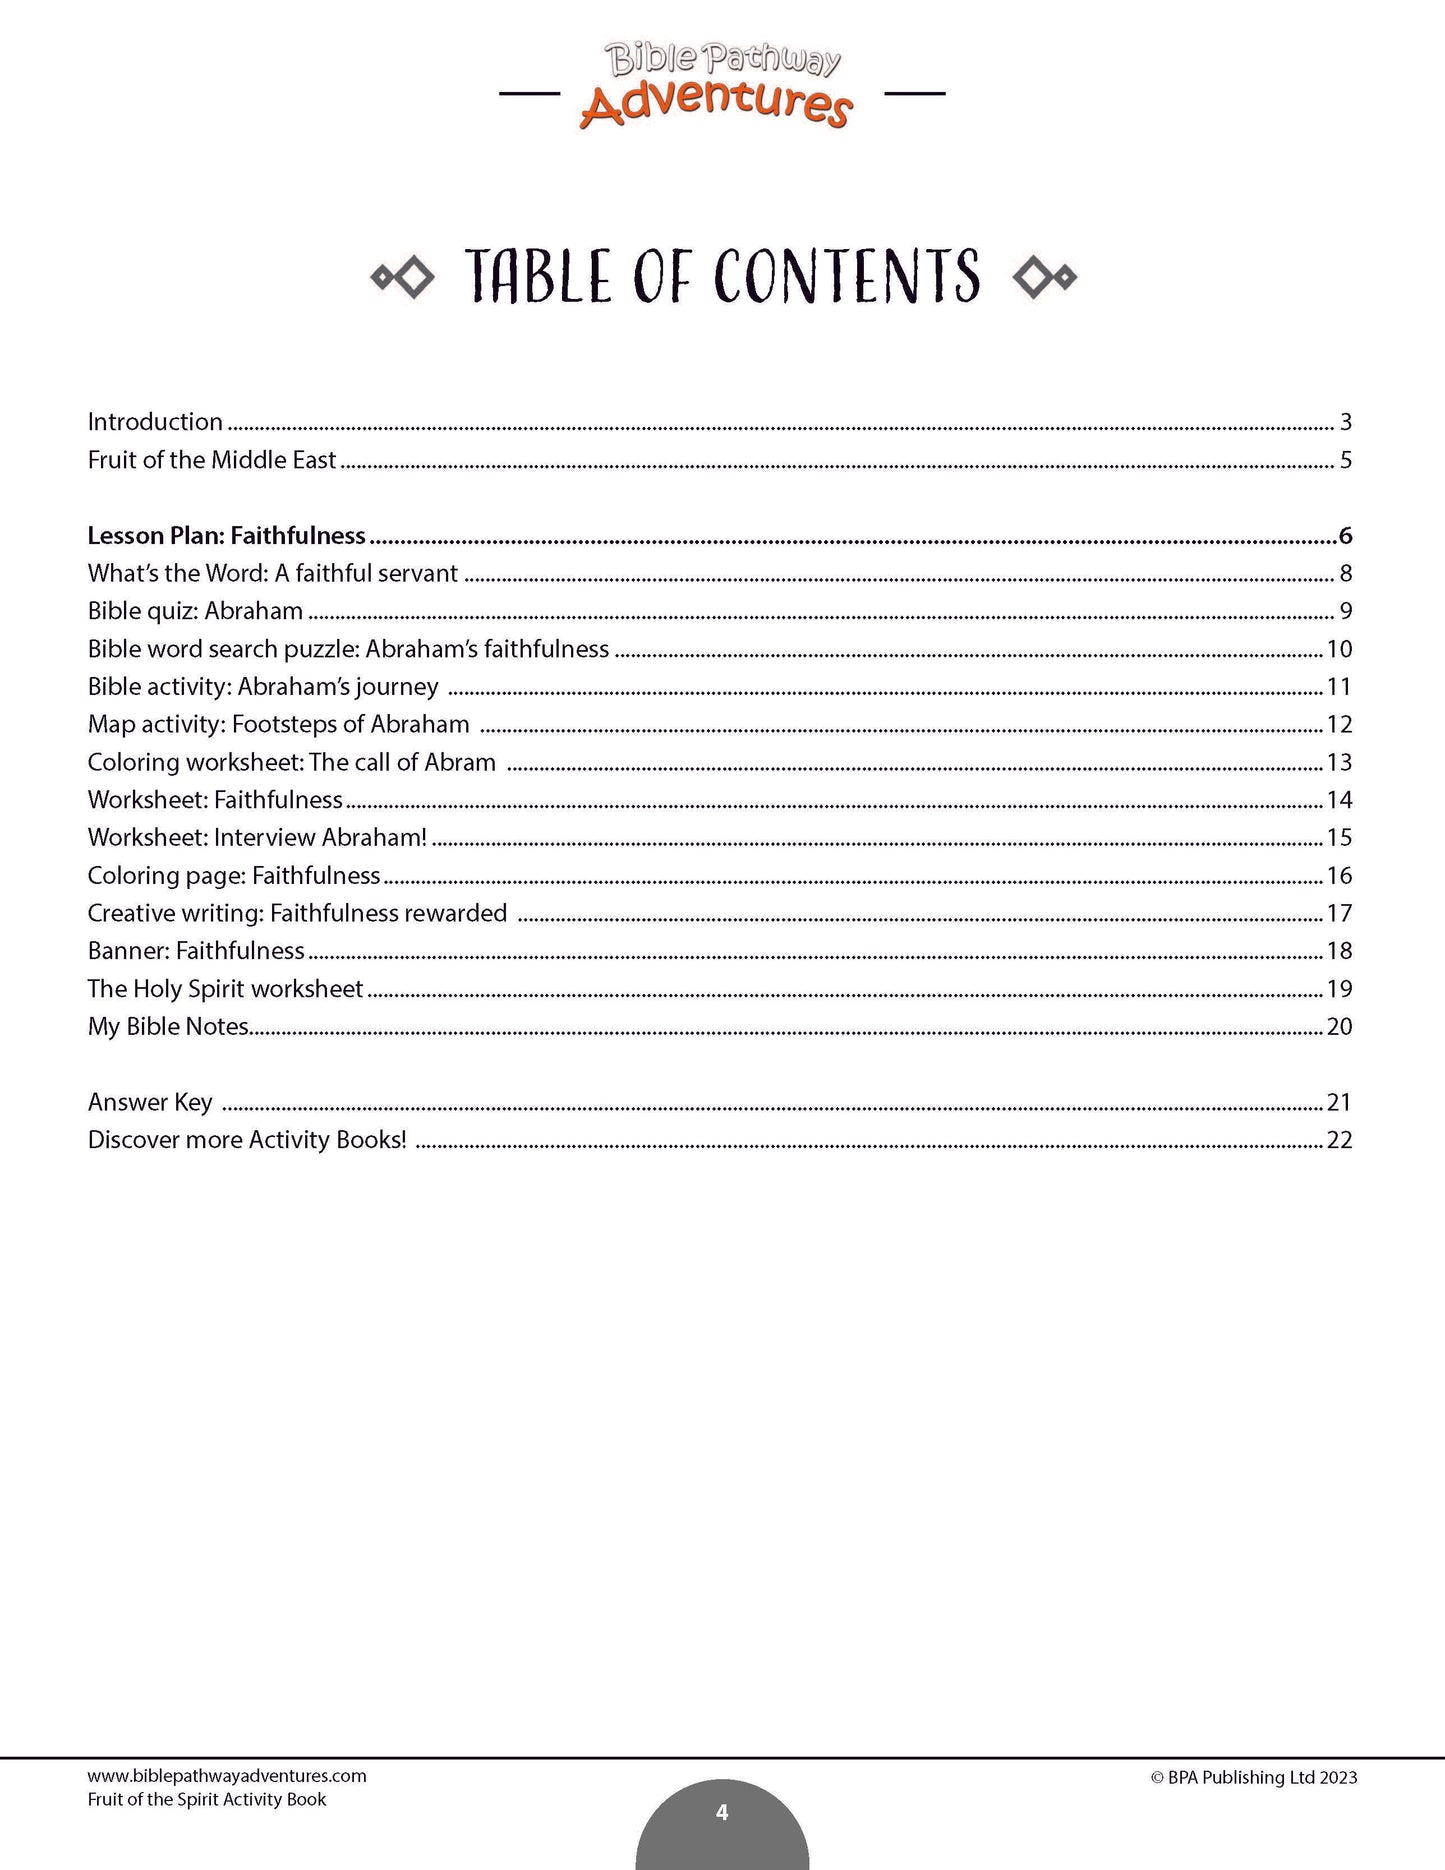 Faithfulness: Fruit of the Spirit Activity Book (PDF)